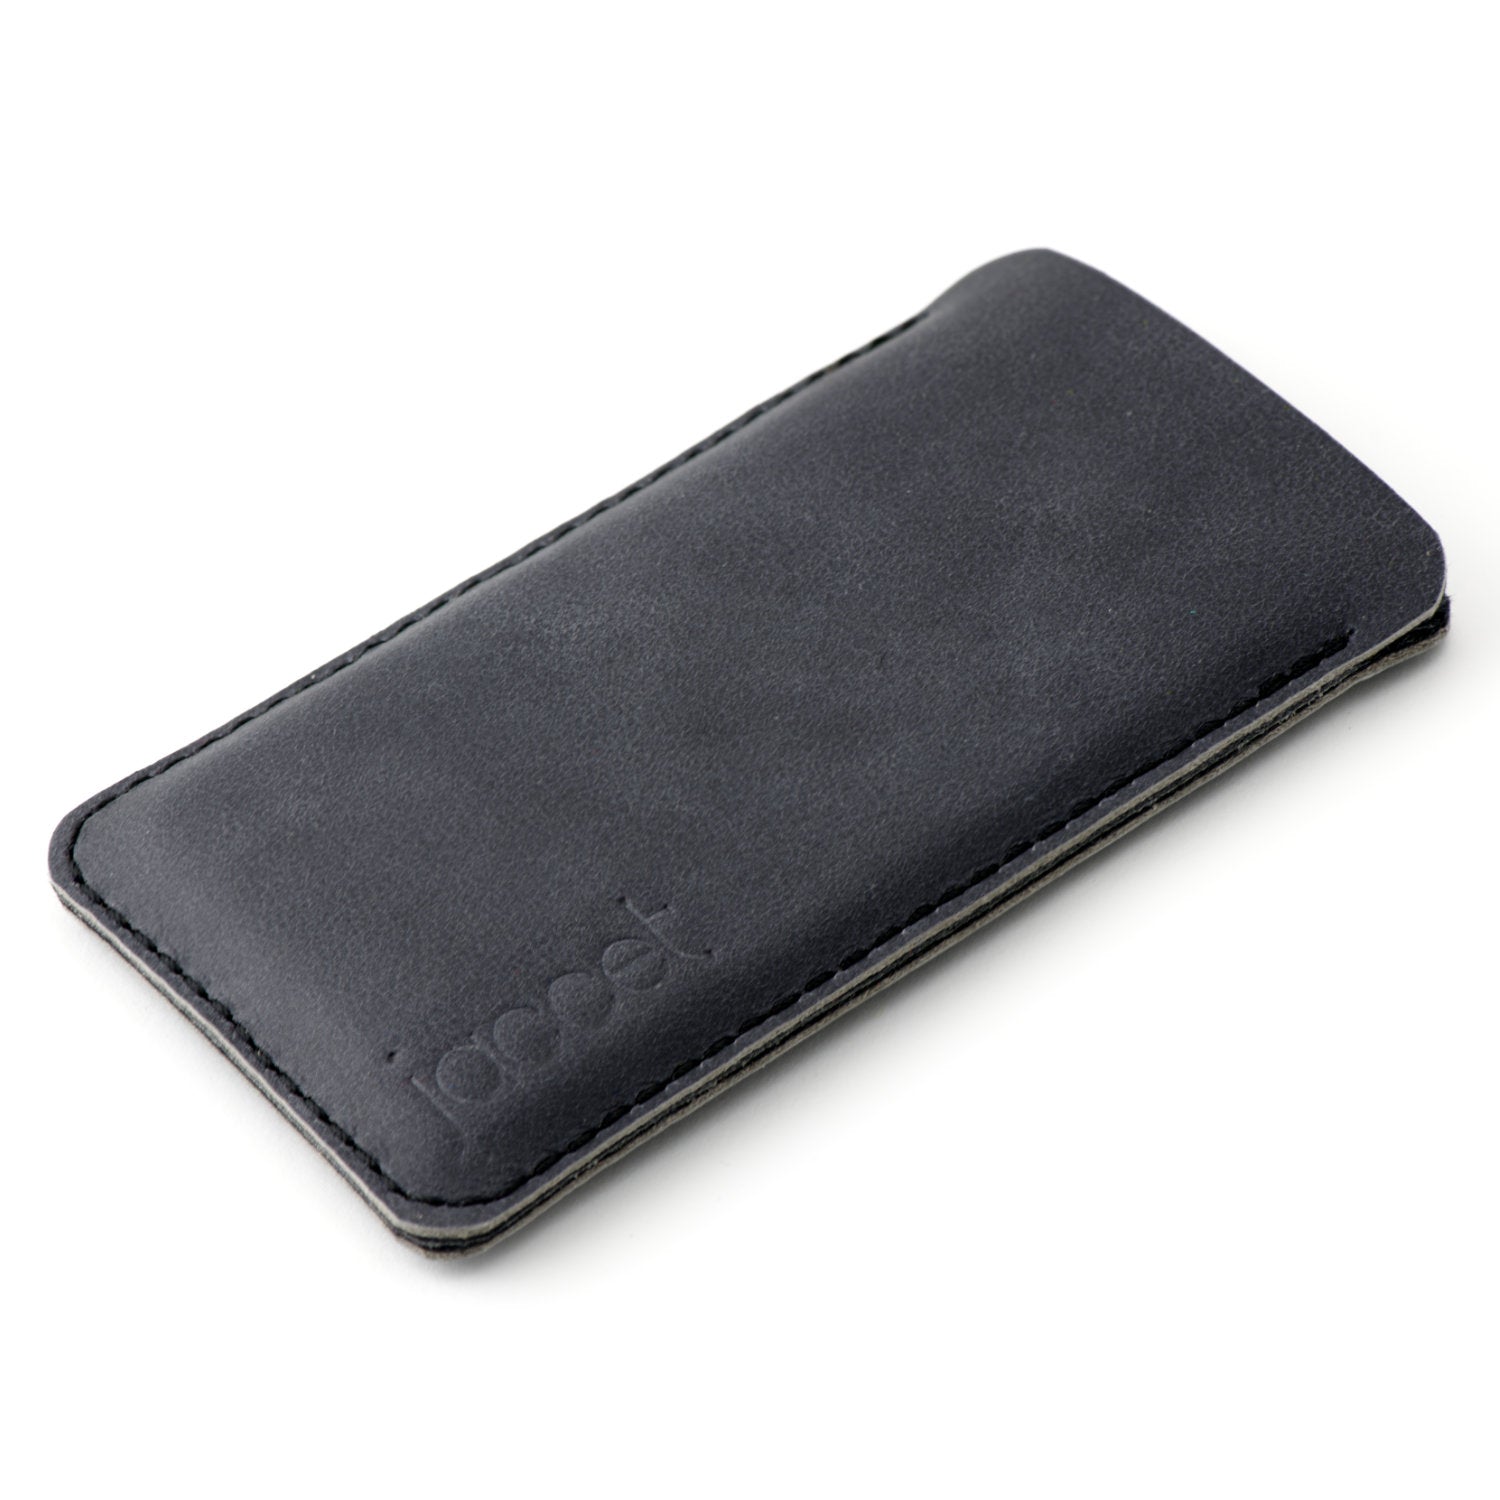 JACCET leather Google Pixel sleeve - anthracite/black leather with black wool felt. 100% Handmade